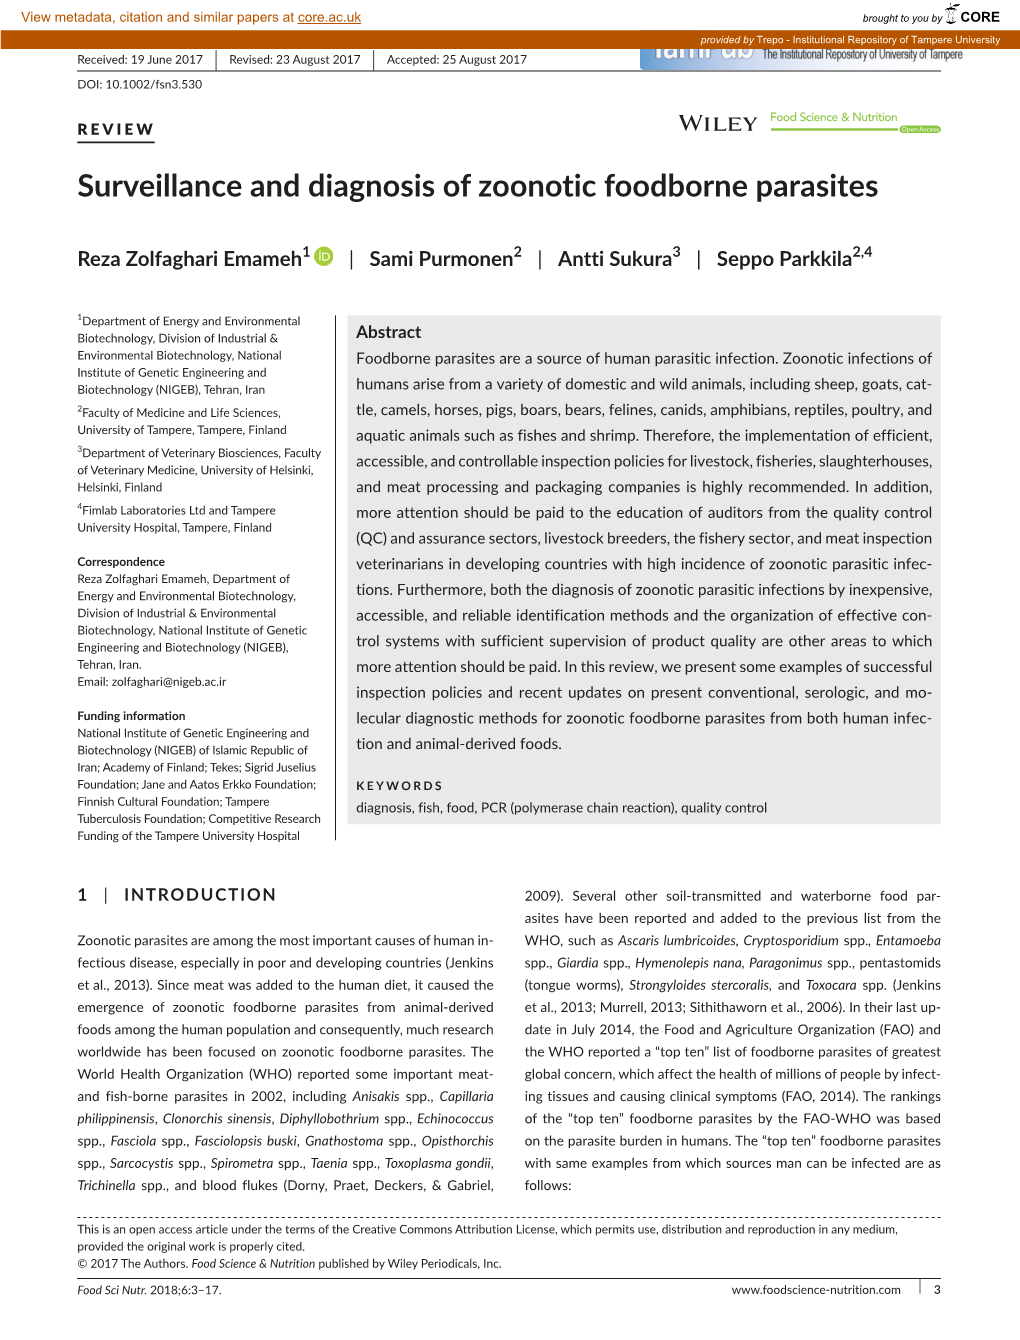 Surveillance and Diagnosis of Zoonotic Foodborne Parasites